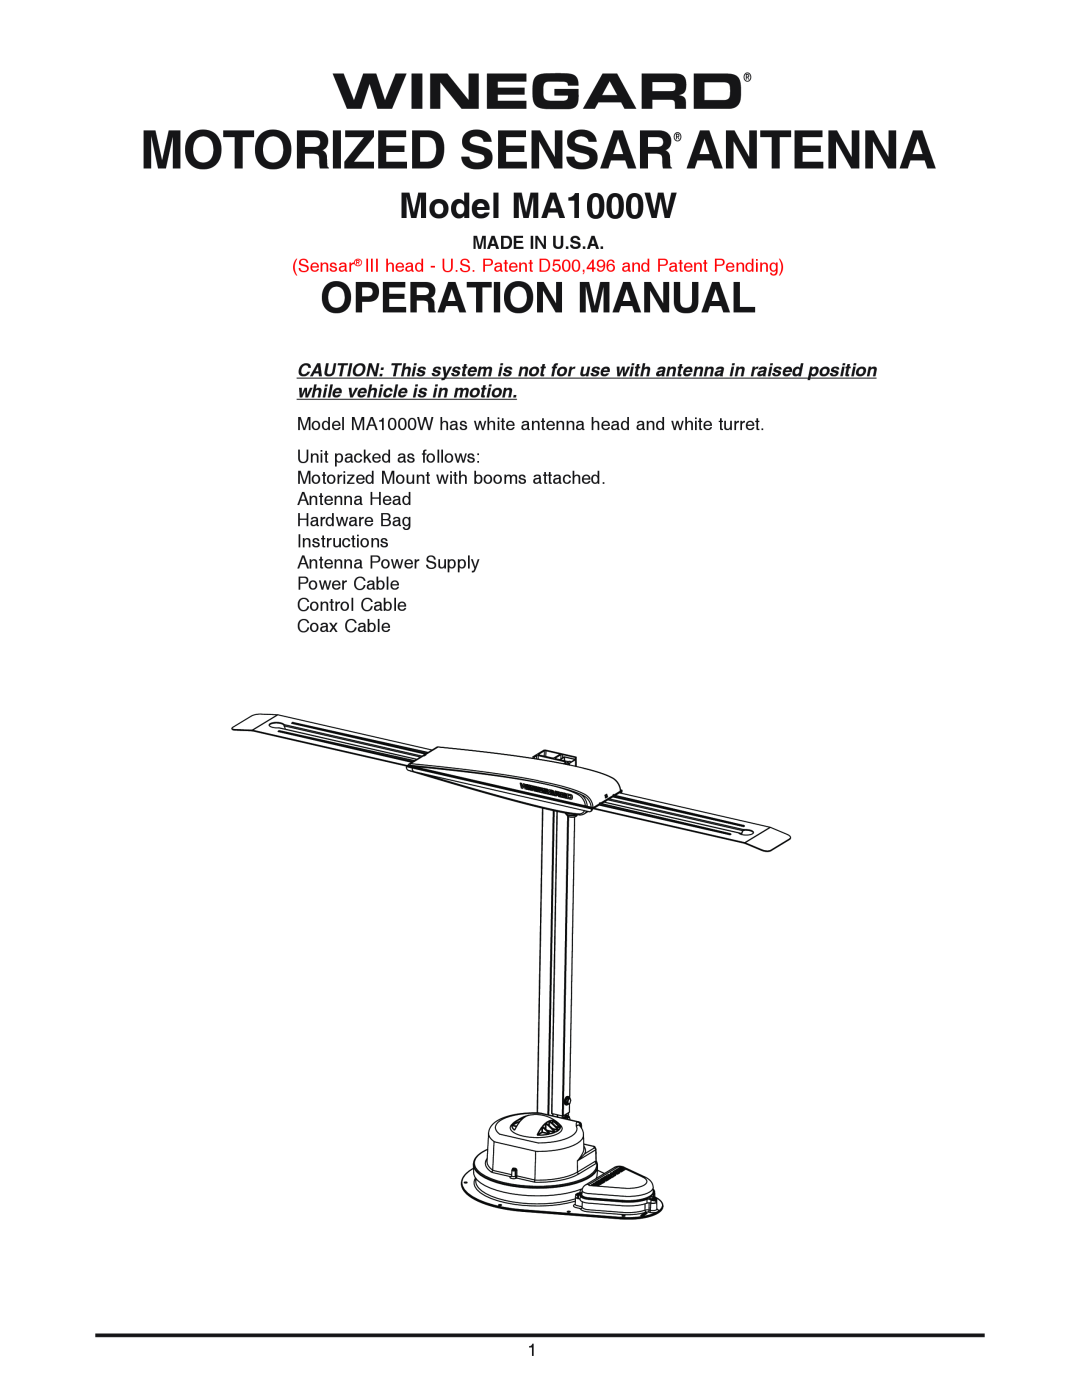 Winegard operation manual Winegard Motorized Sensar Antenna, Model MA1000W, Made In U.S.A 